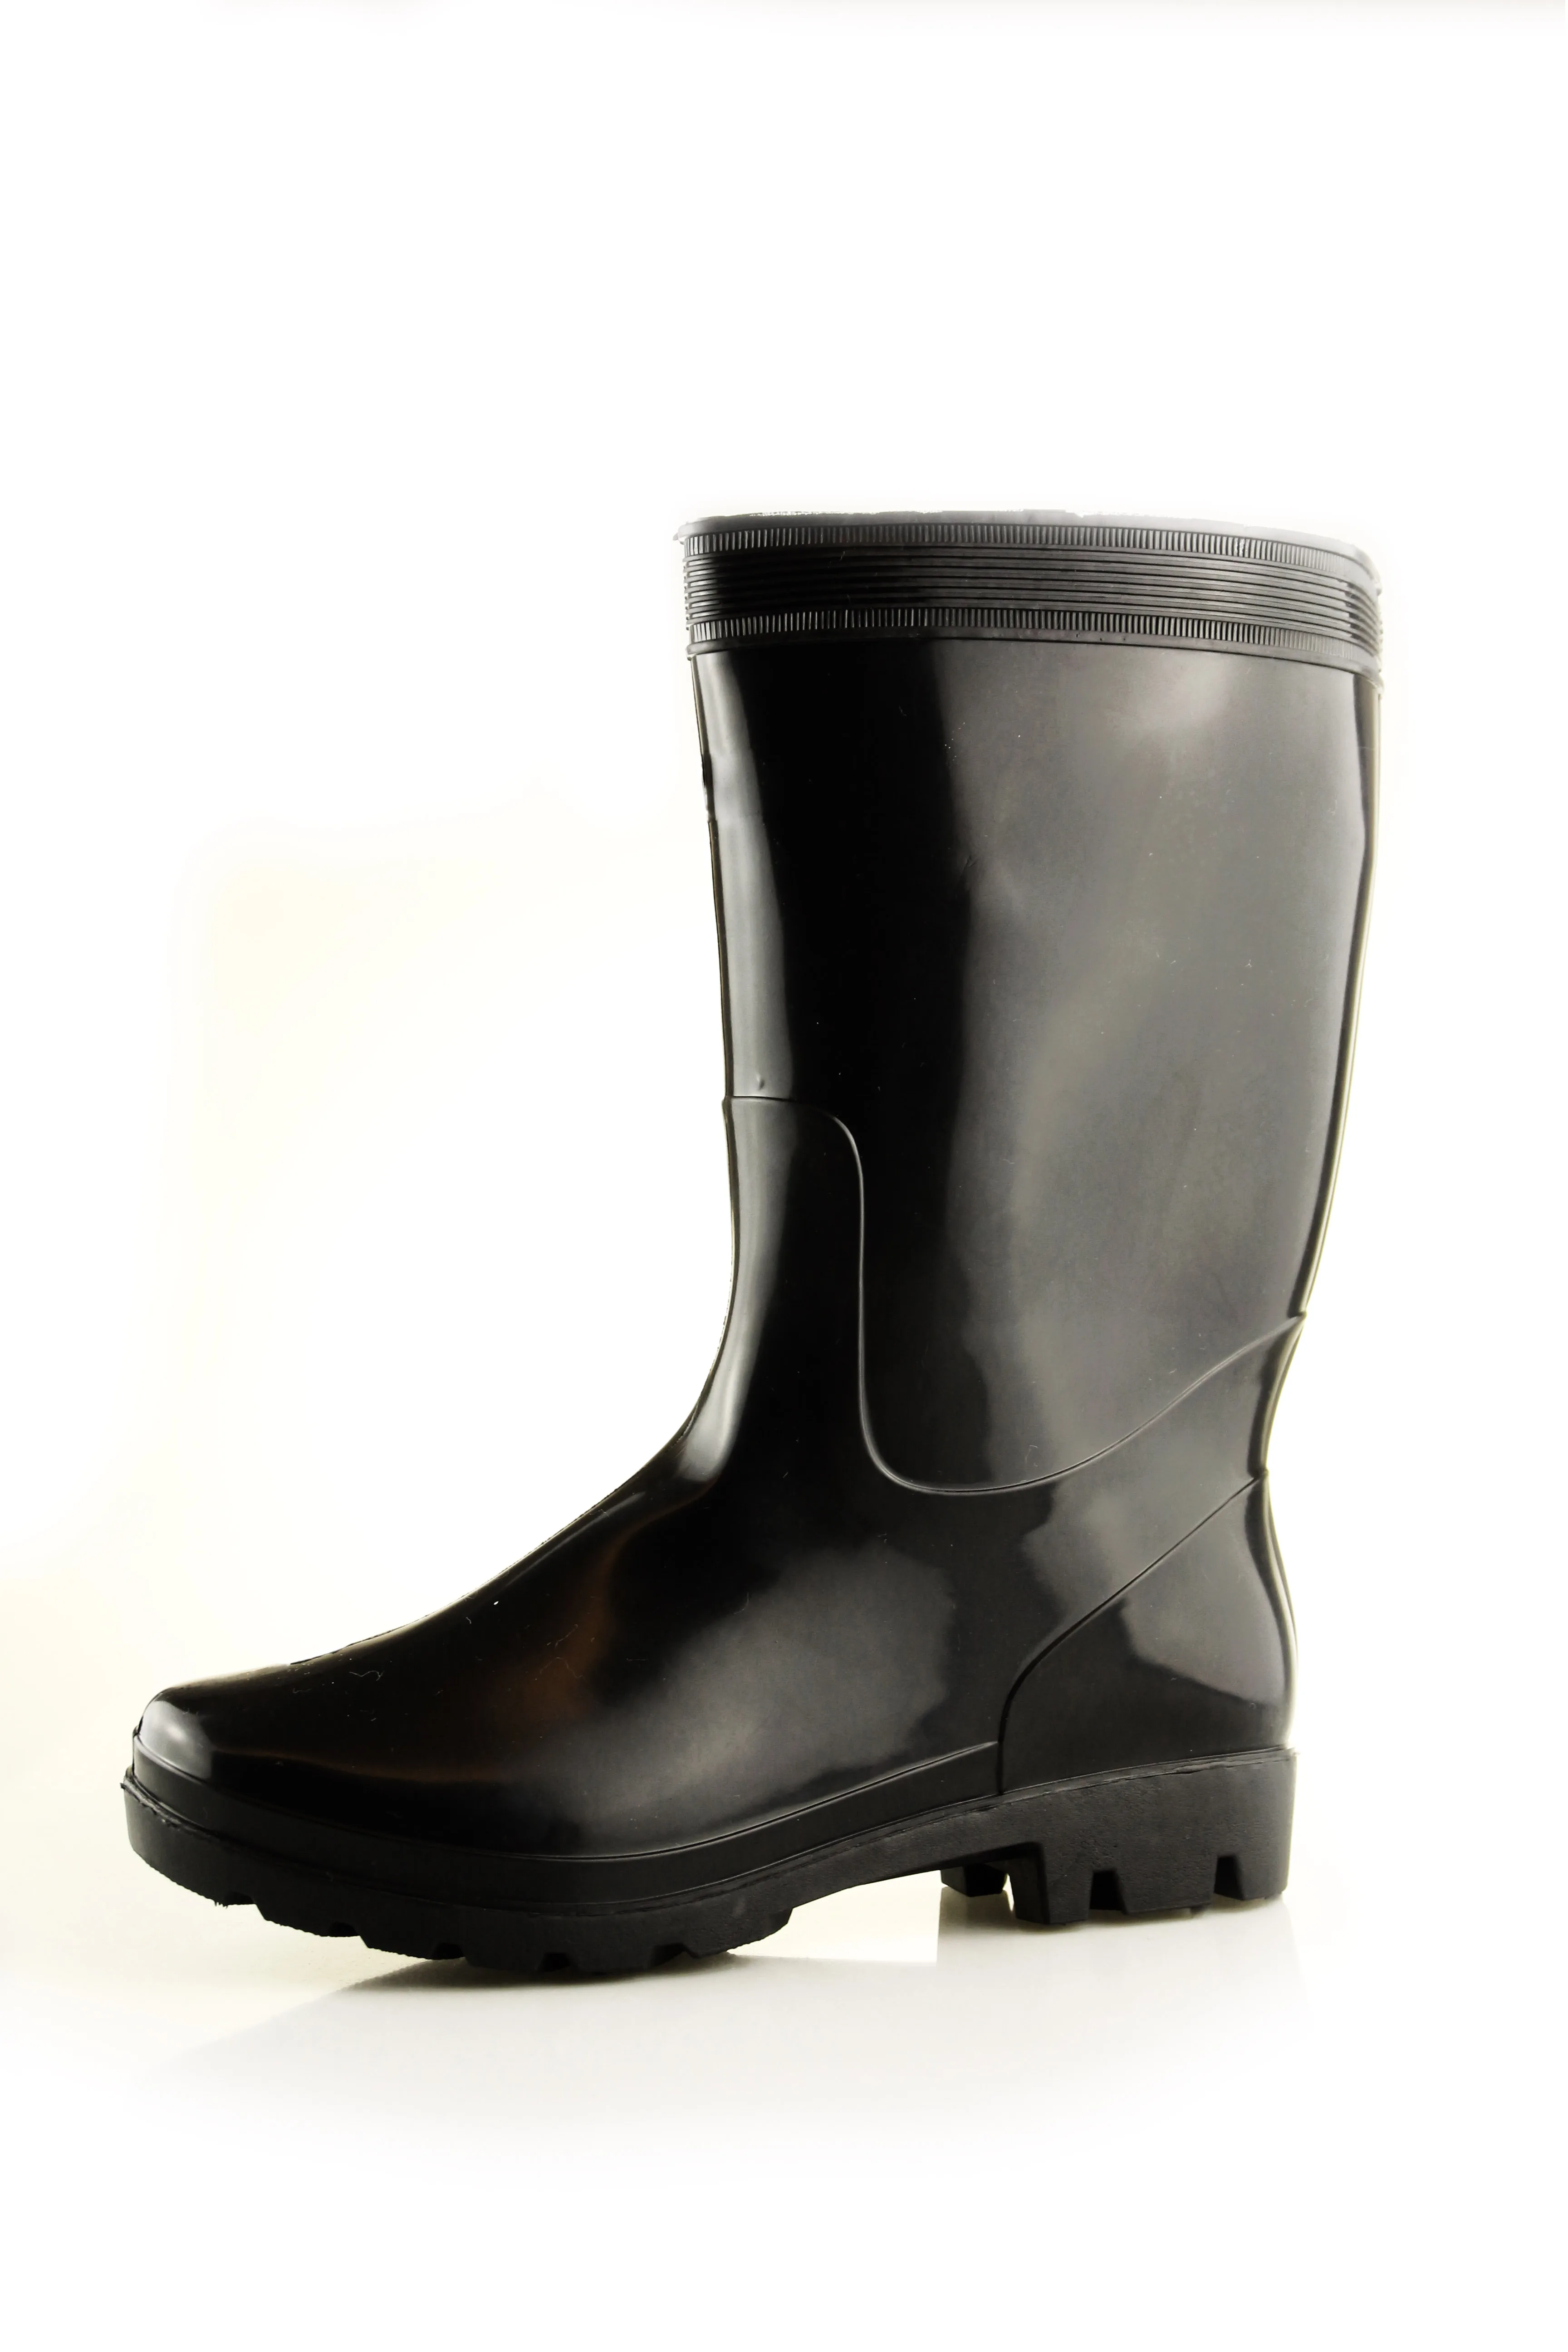 Cheap Waterproof Gumboots Shiny Black Bog Rain Boots Garden Pvc Boots ...